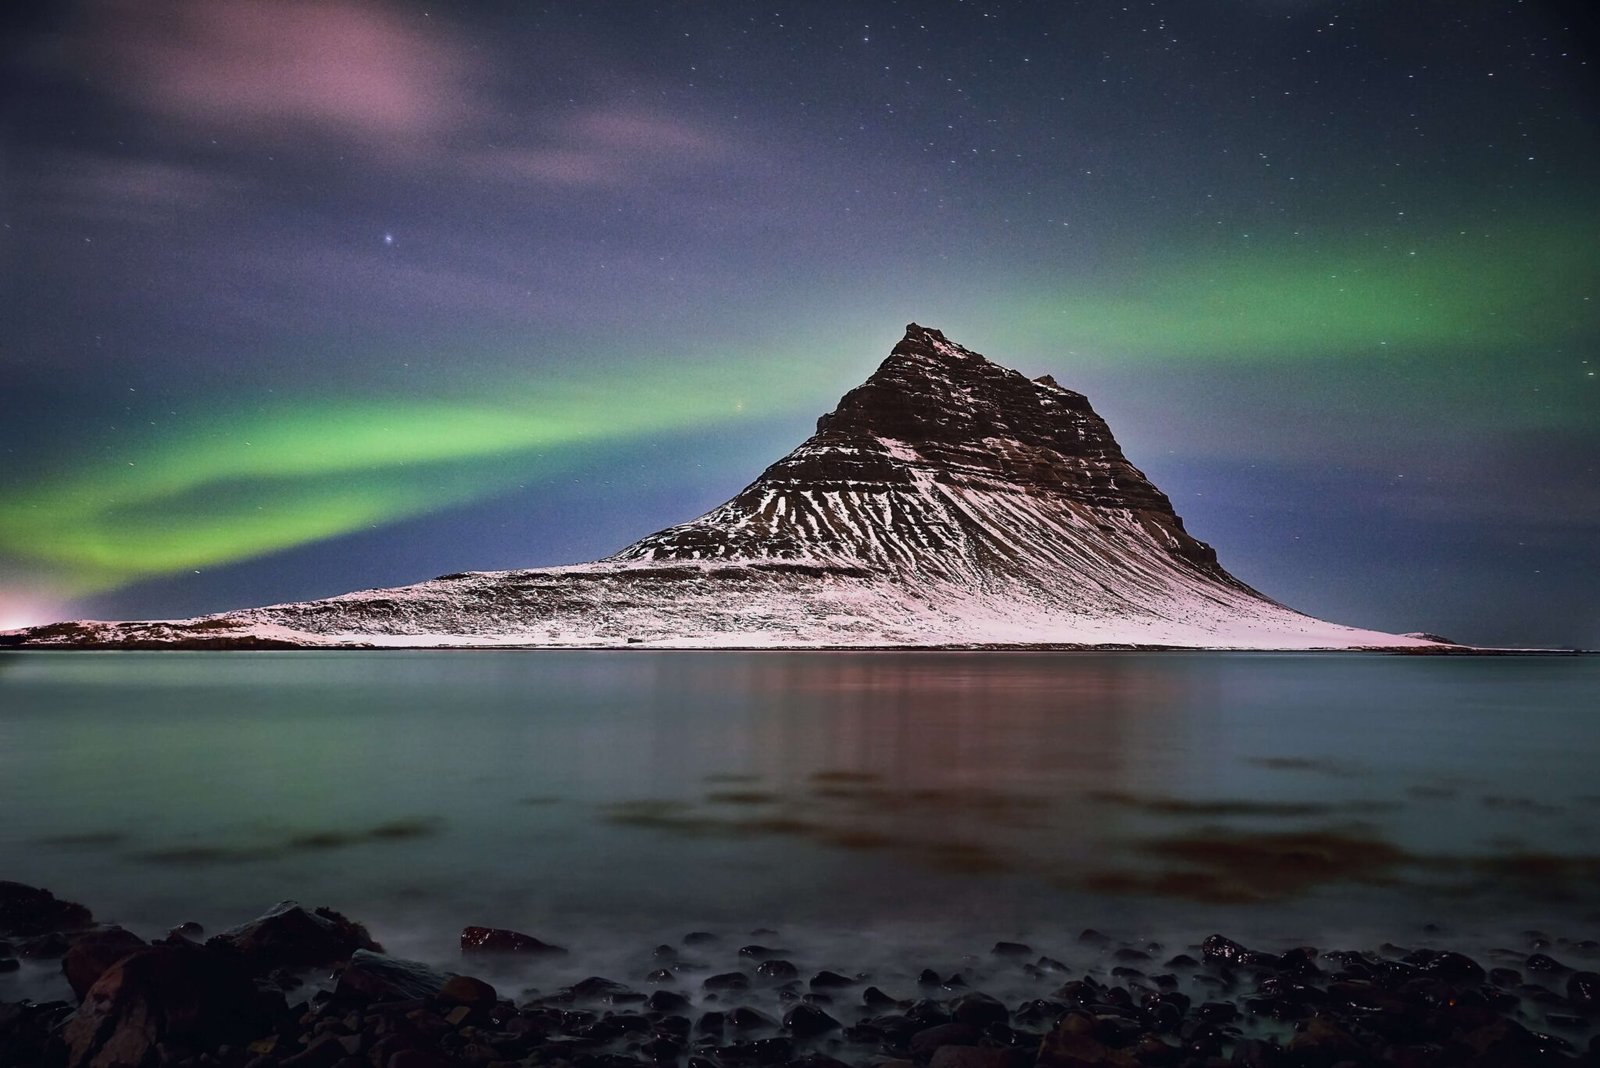 Iceland, winter bucket list destinations